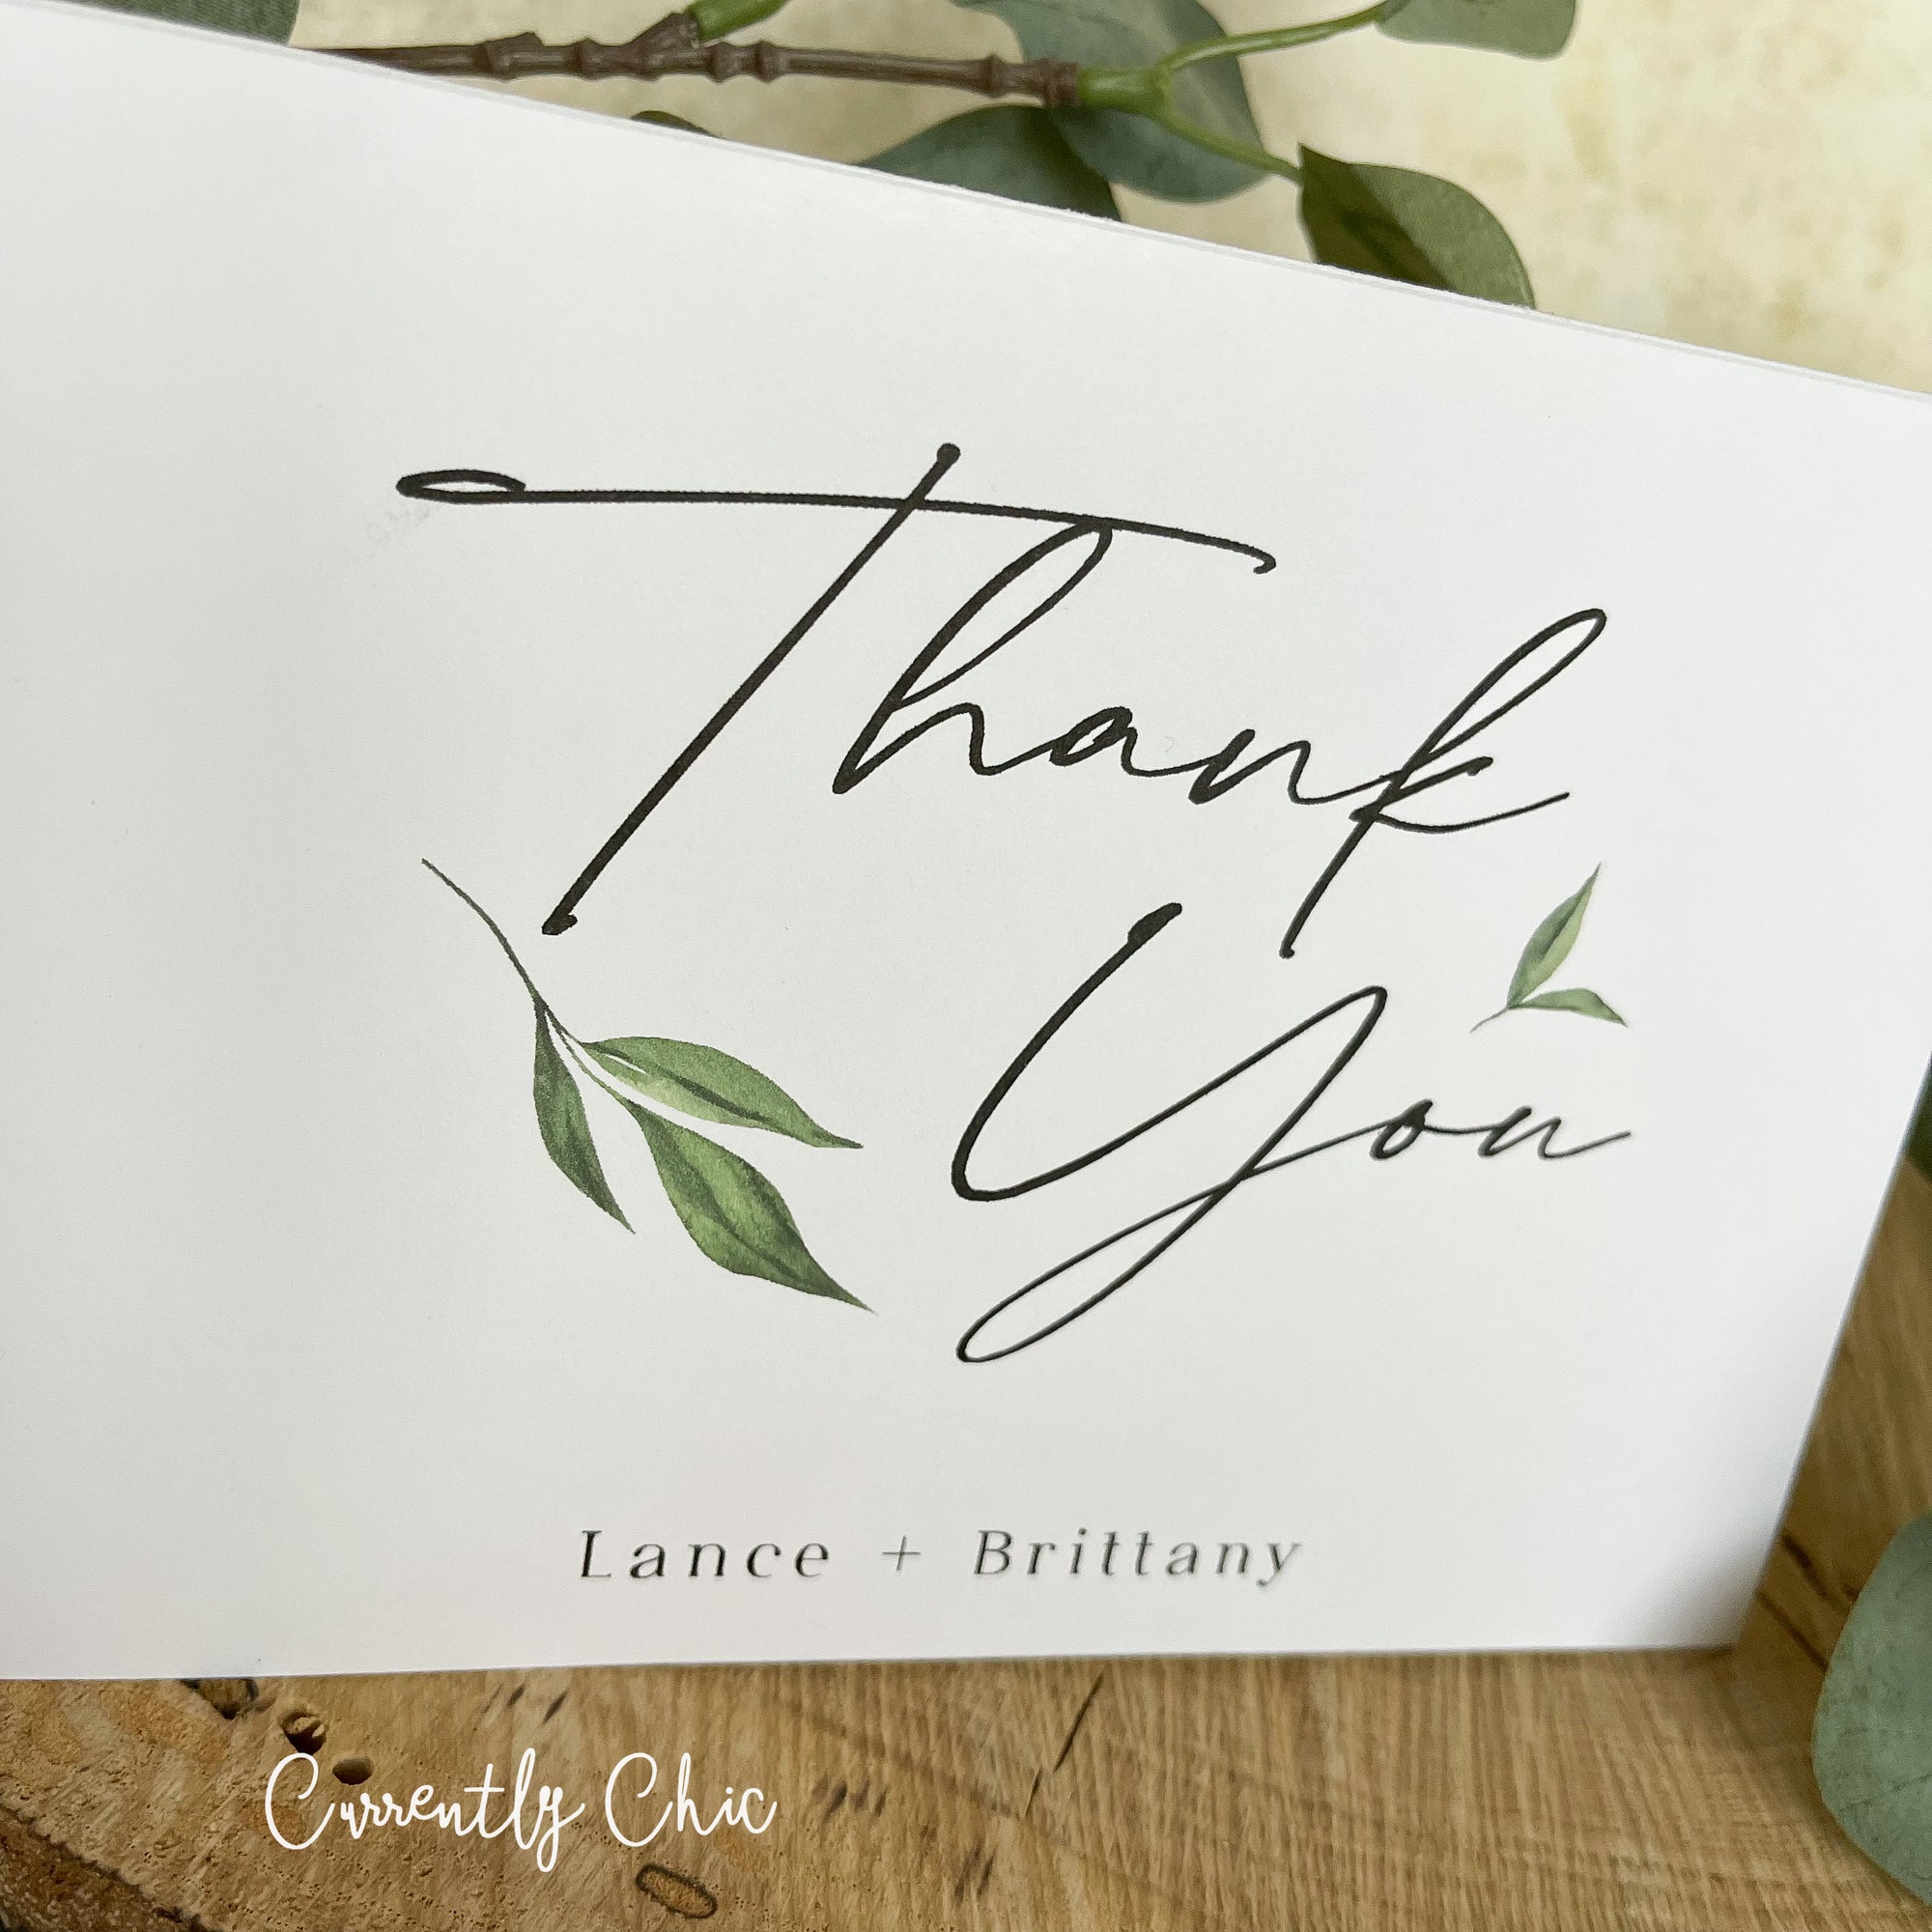 Thank You Personalized Botanical Card